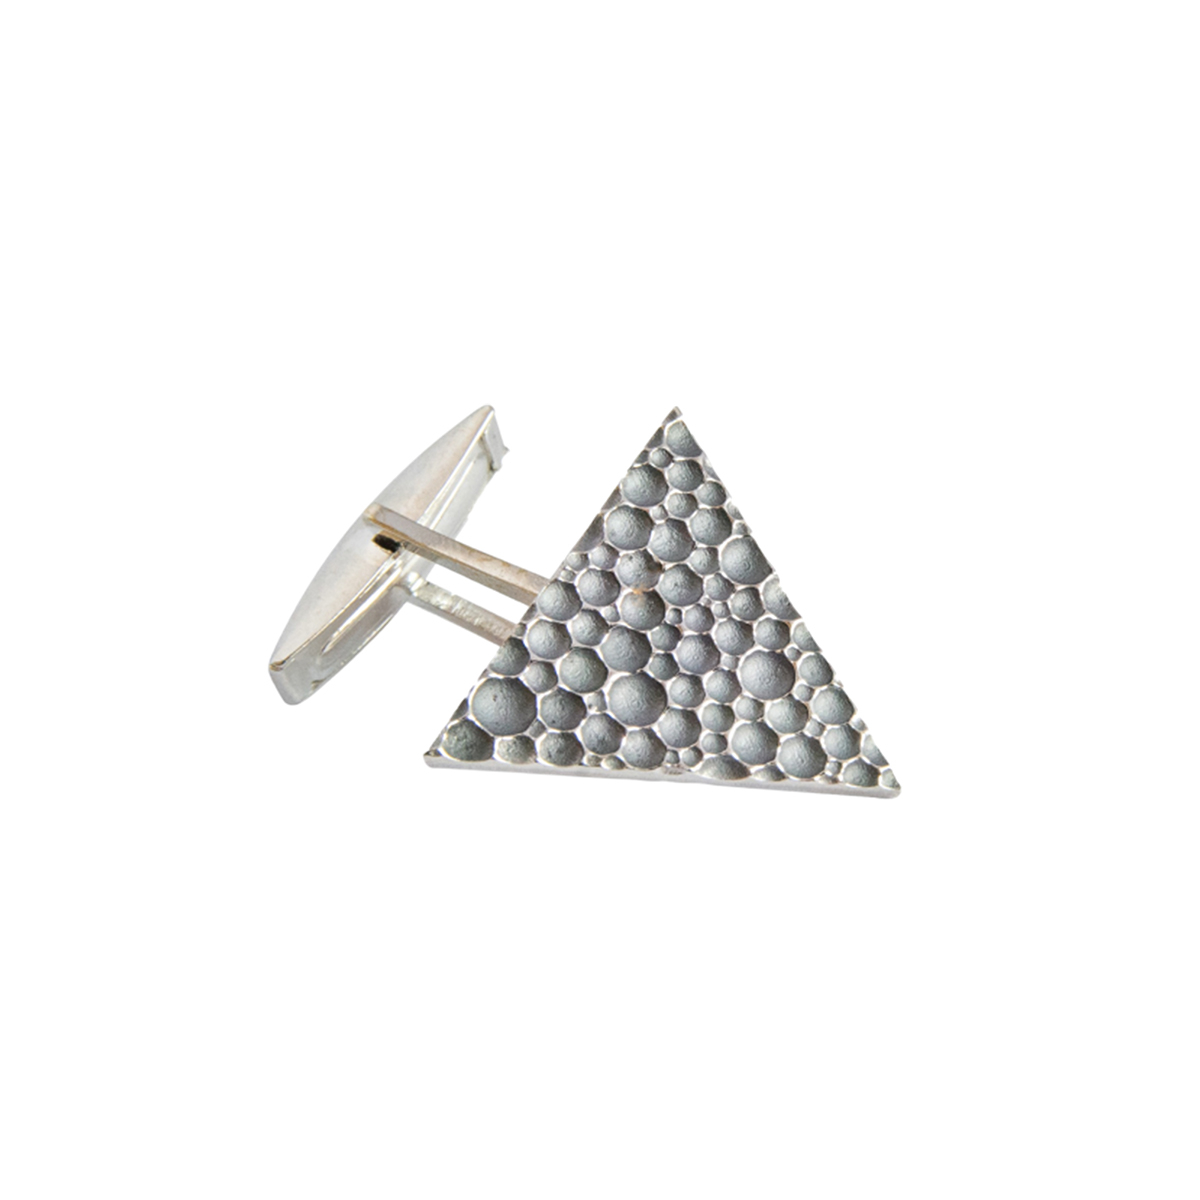 925 silver Triangle cufflinks - Lunar processing technique